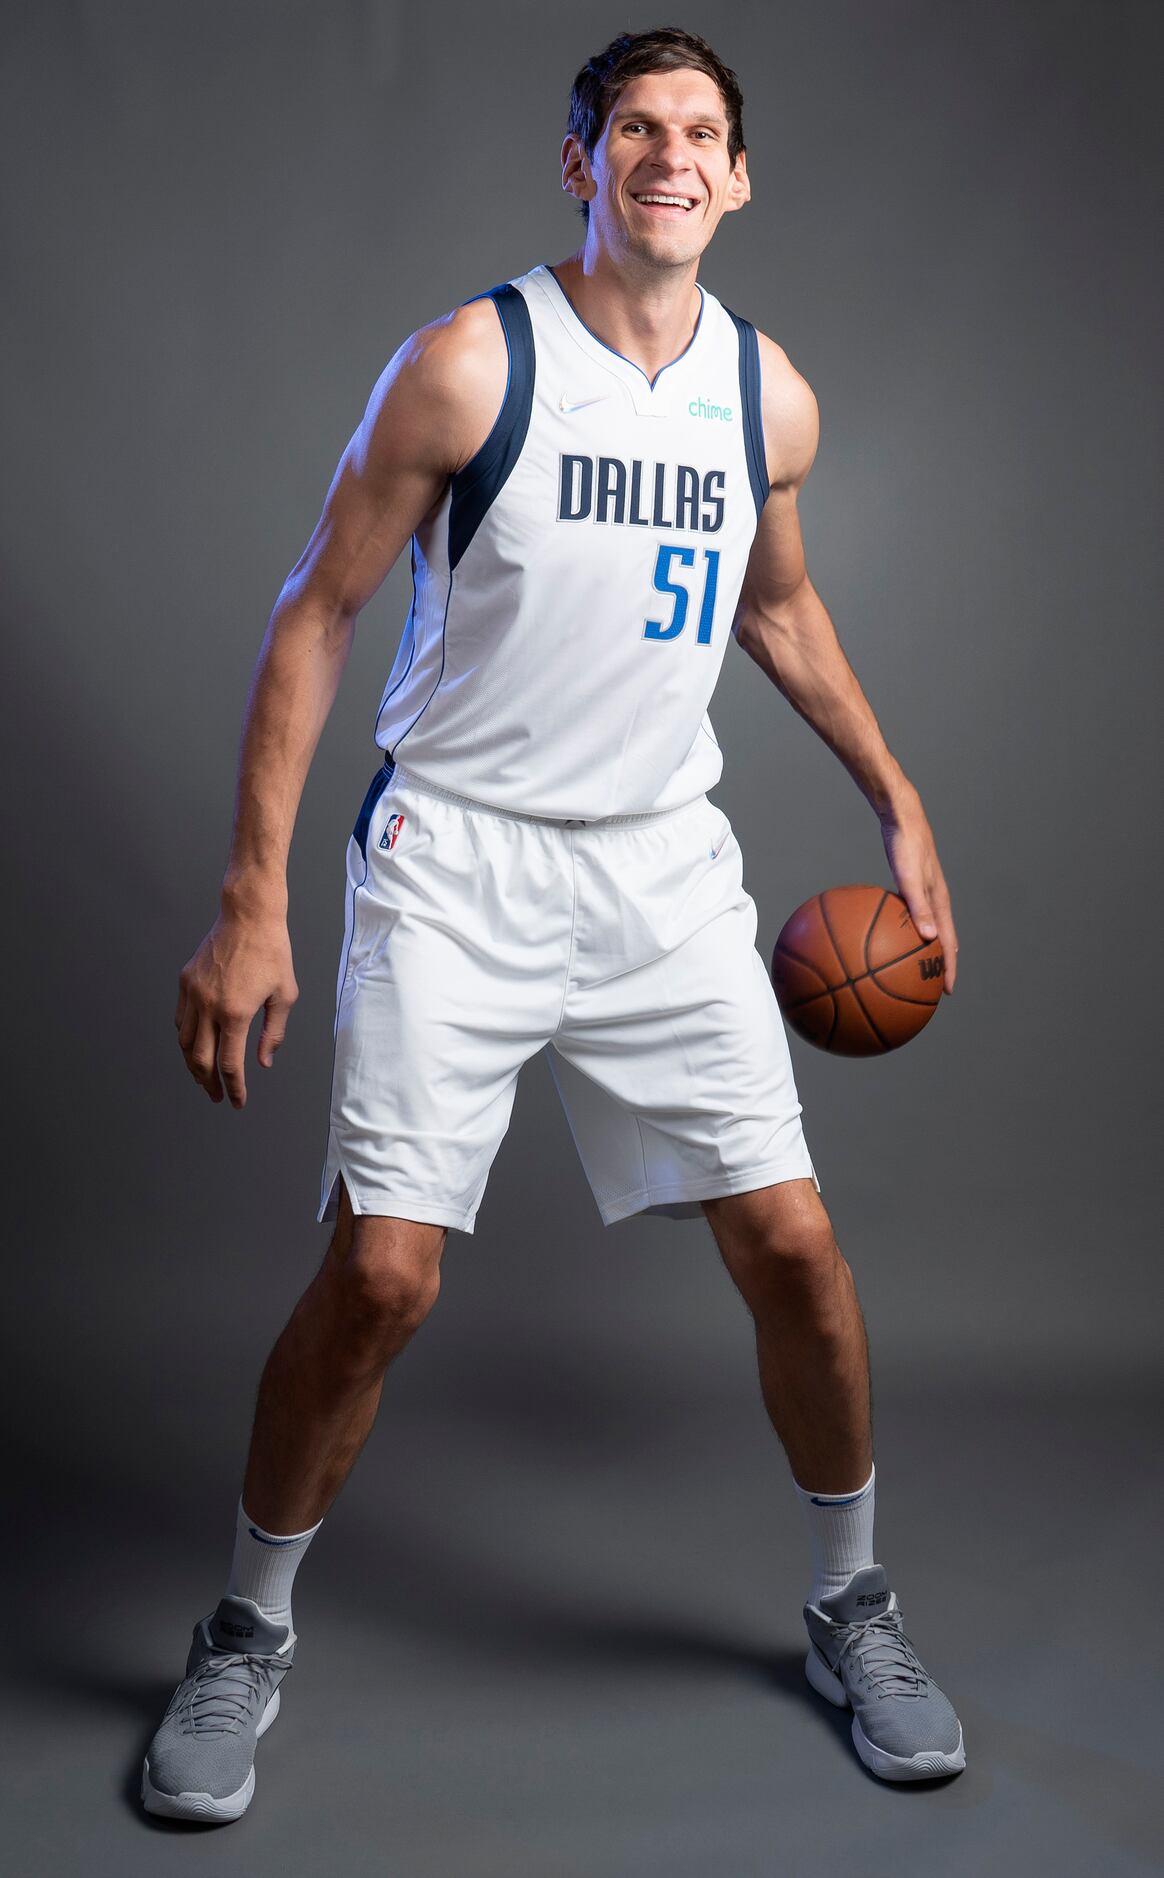 Dallas Mavericks center Boban Marjanovic (51) poses during the NBA